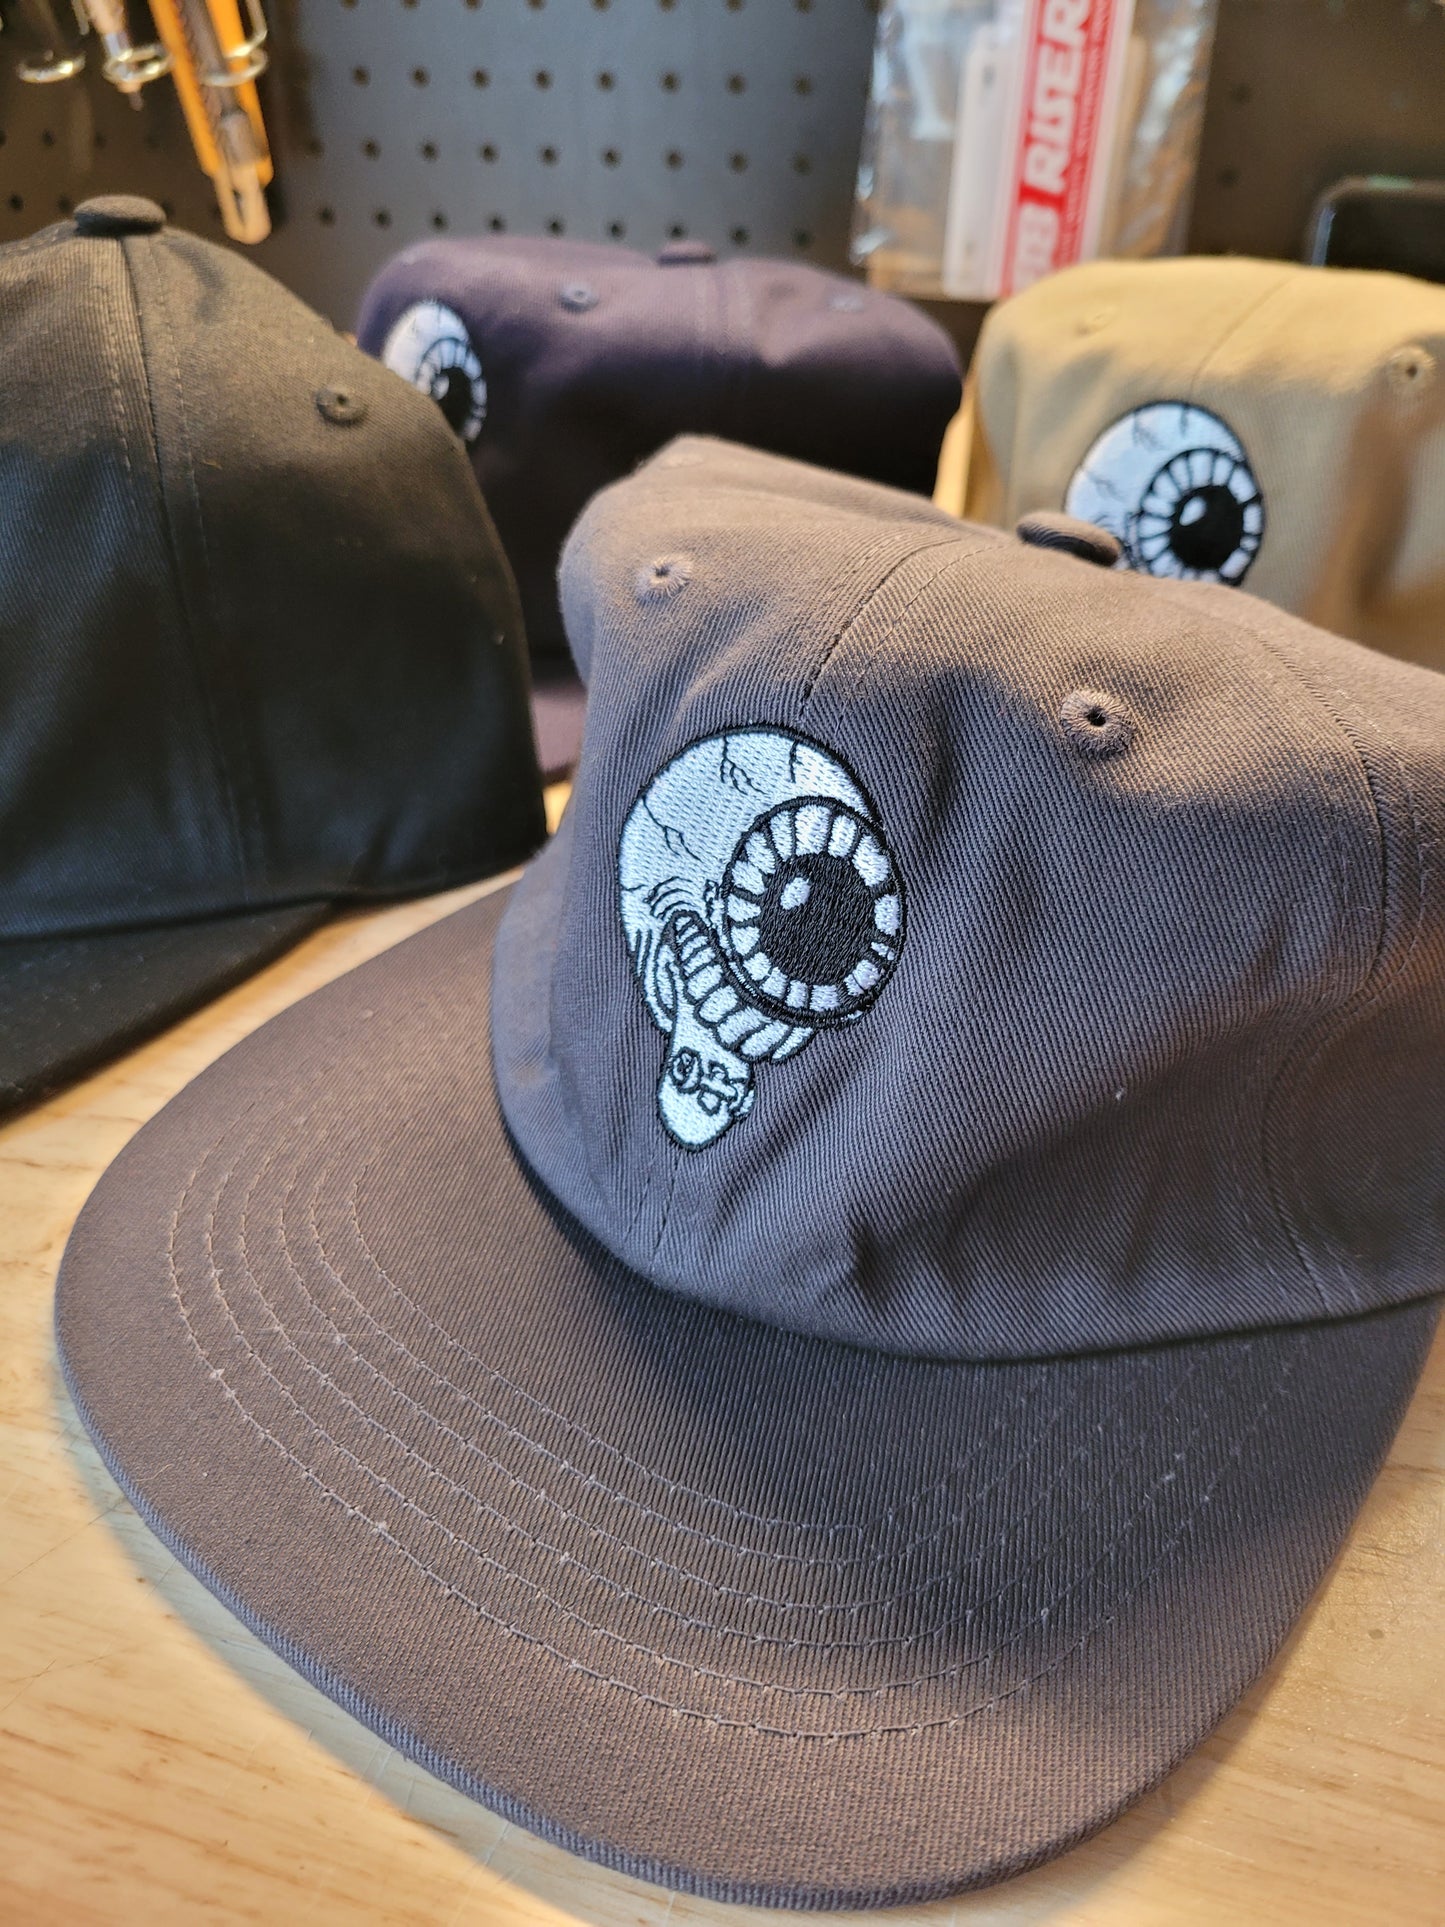 Retna - Eye Logo Hats